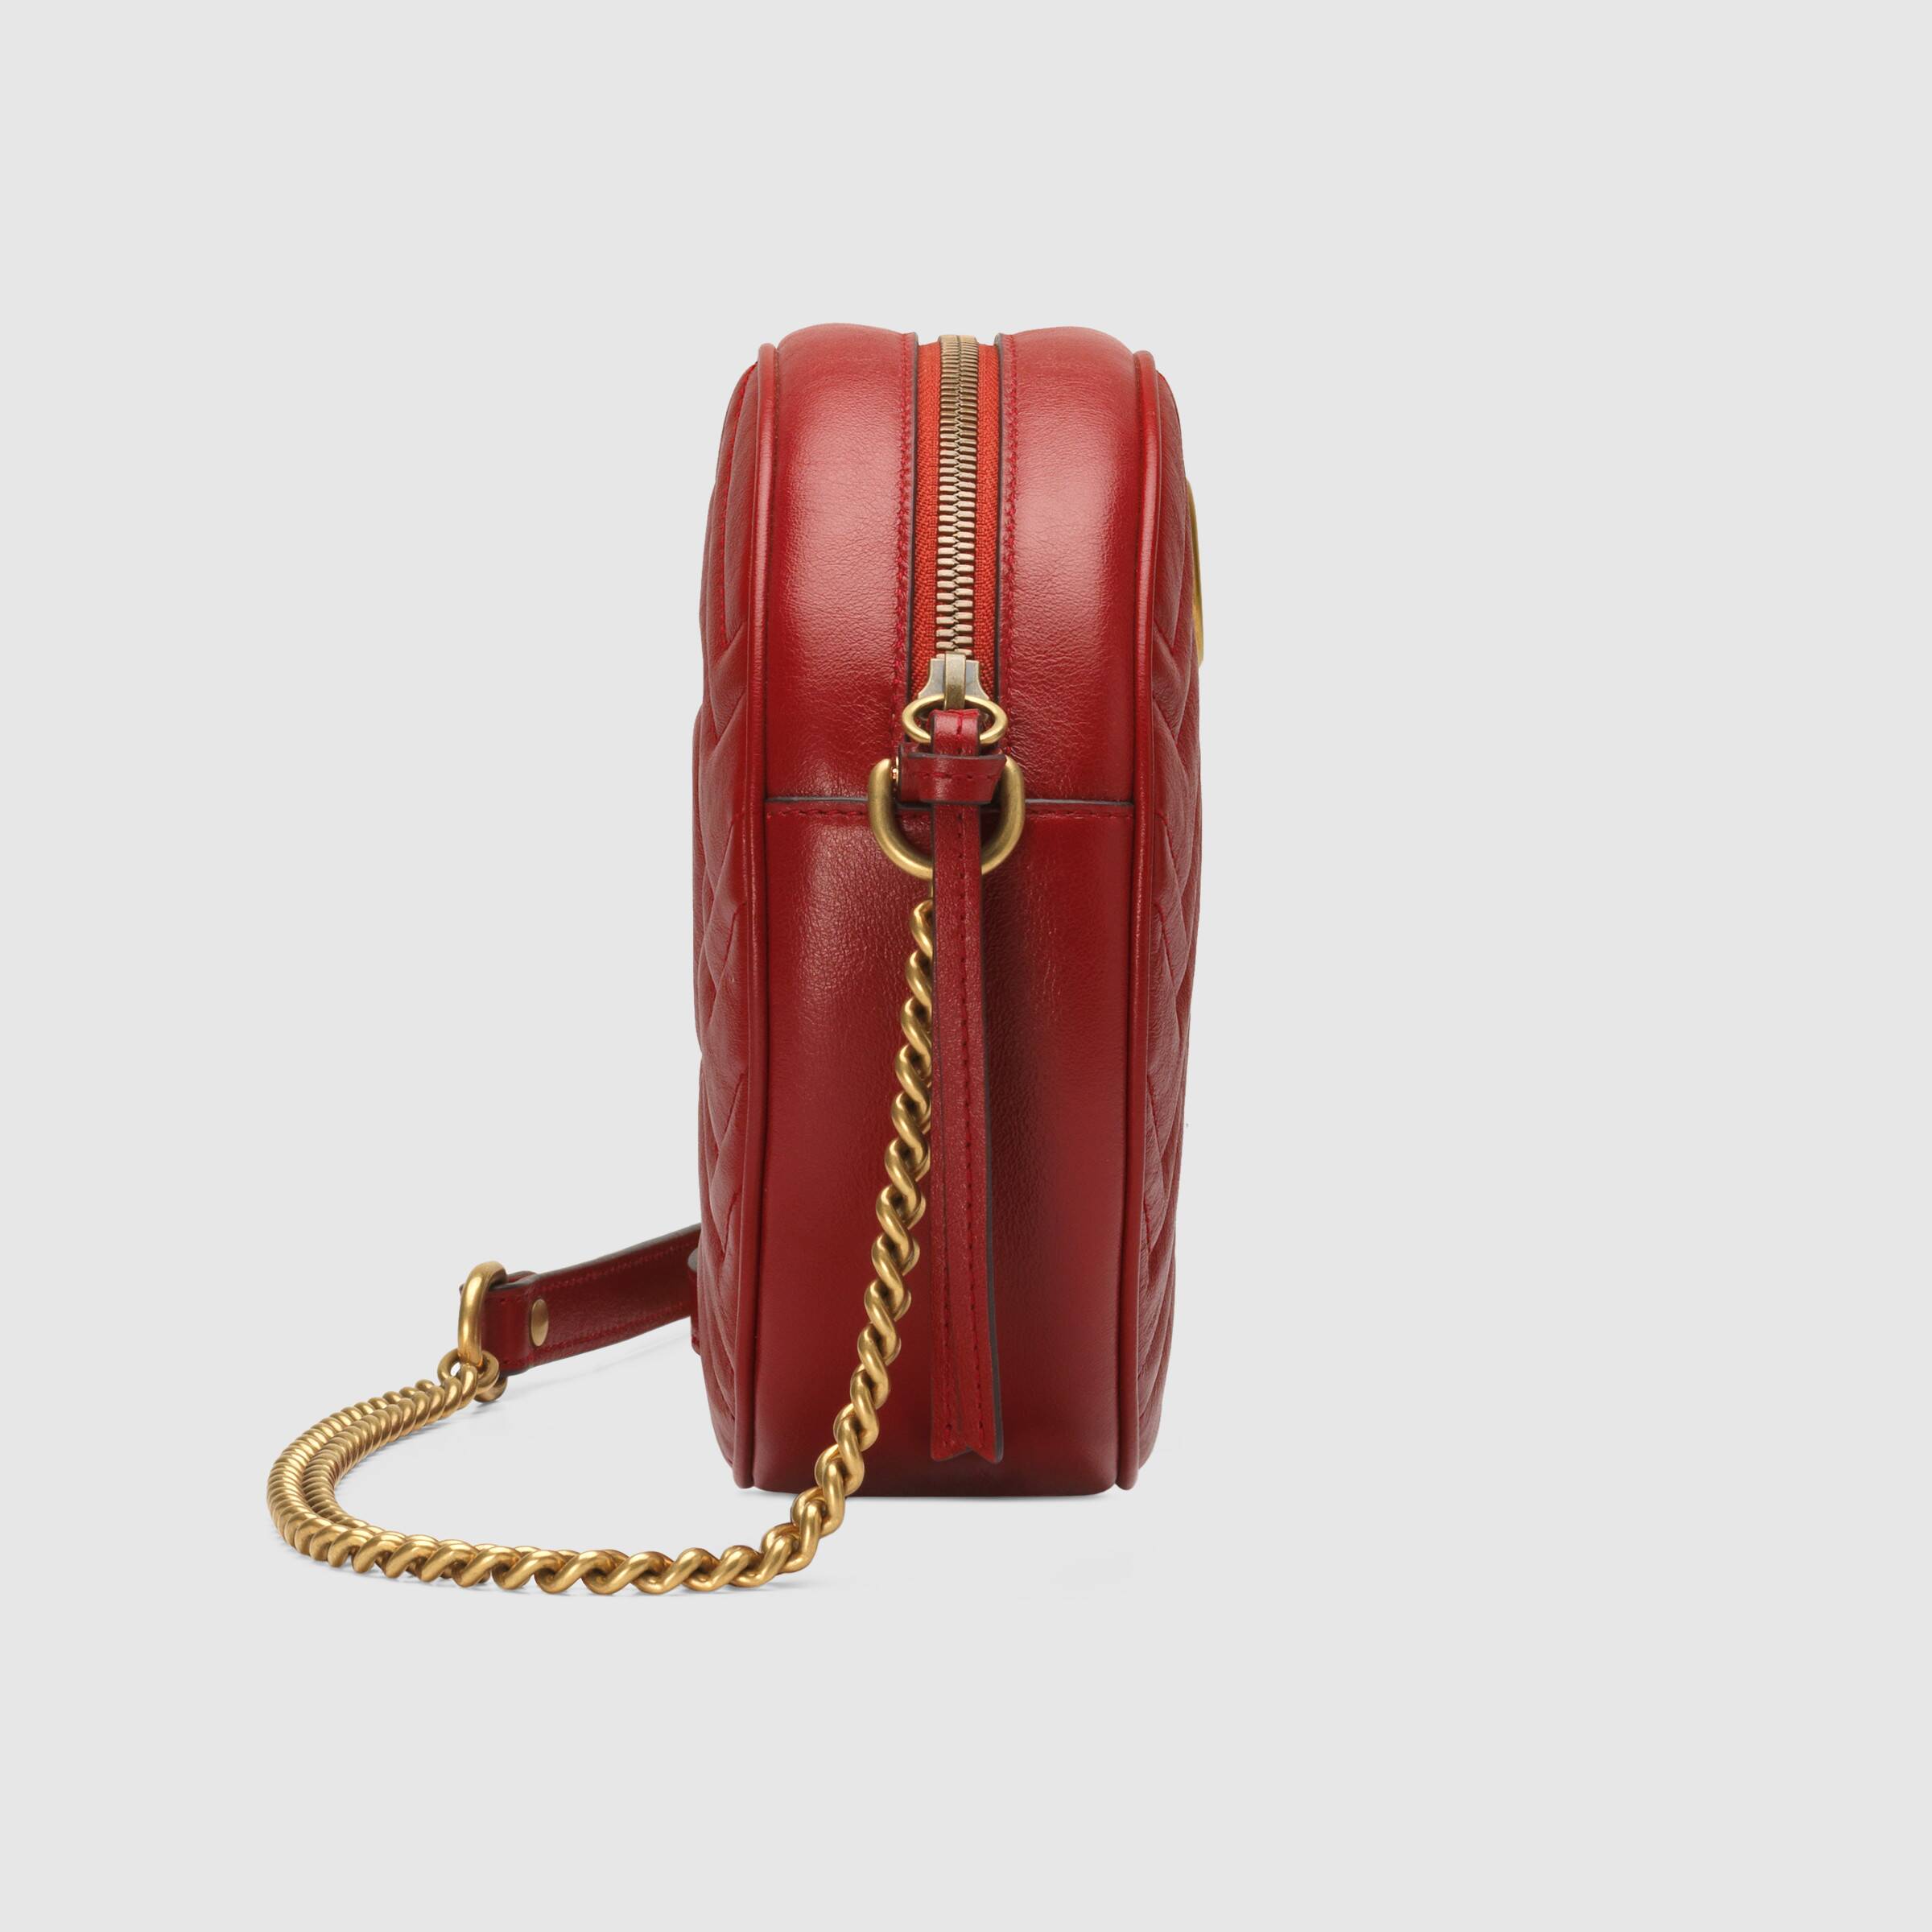 Gucci GG Marmont Mini Round Shoulder Bag Wine Red